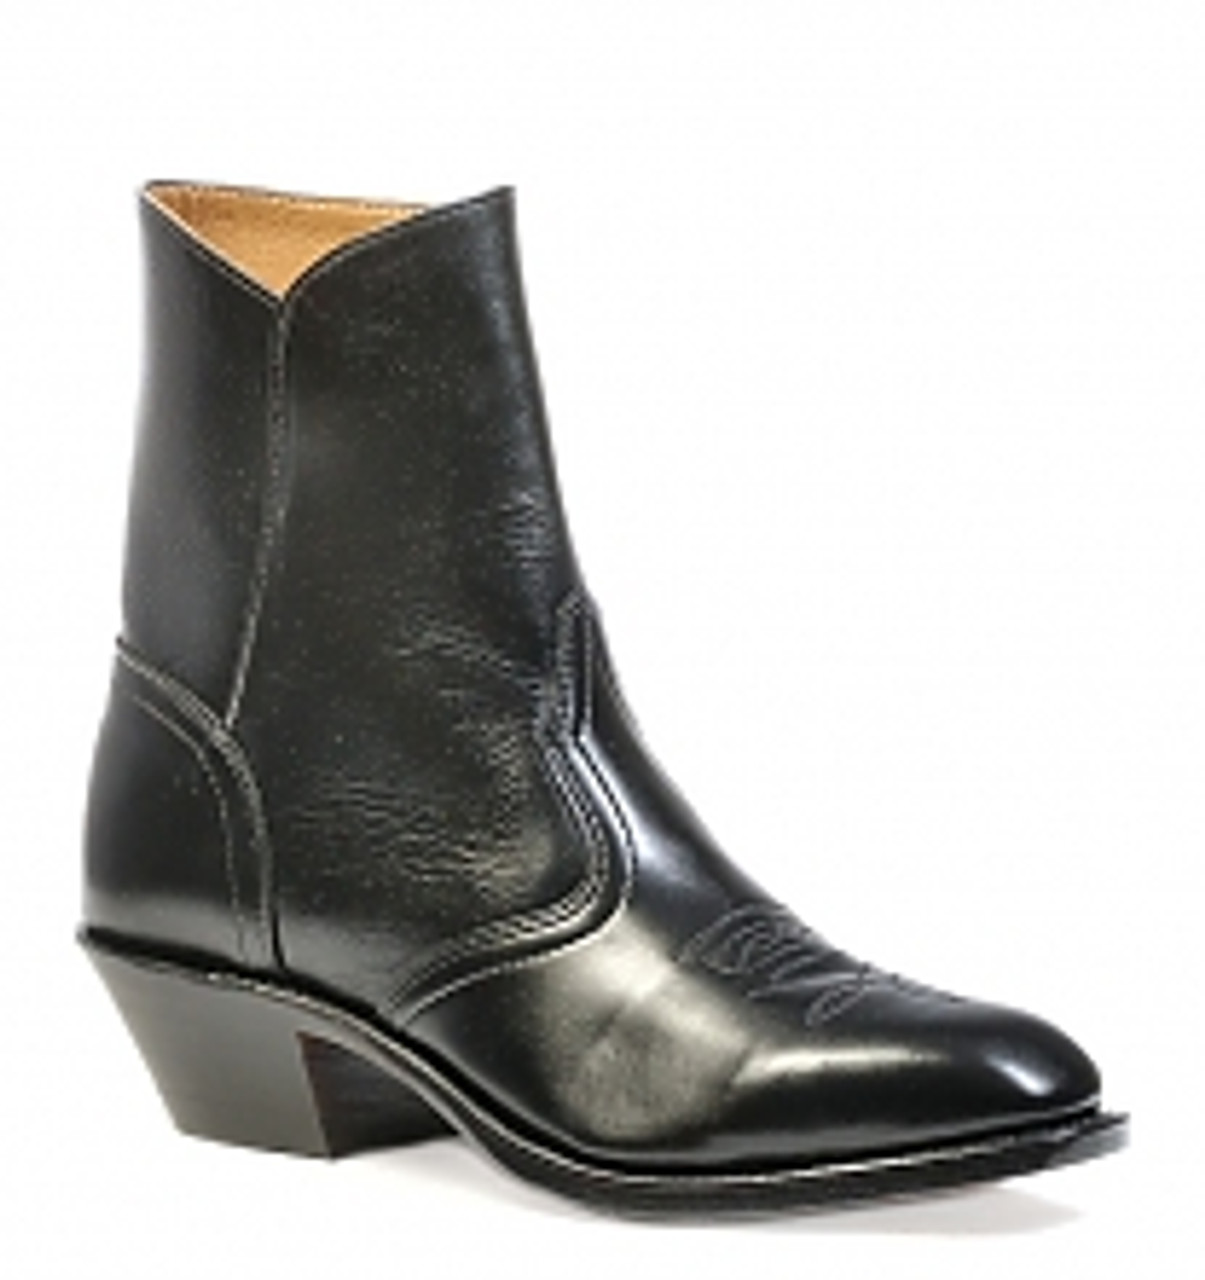 Boulet Mens Western Boots Torino Black Calf 1114 - BestinShoes.com